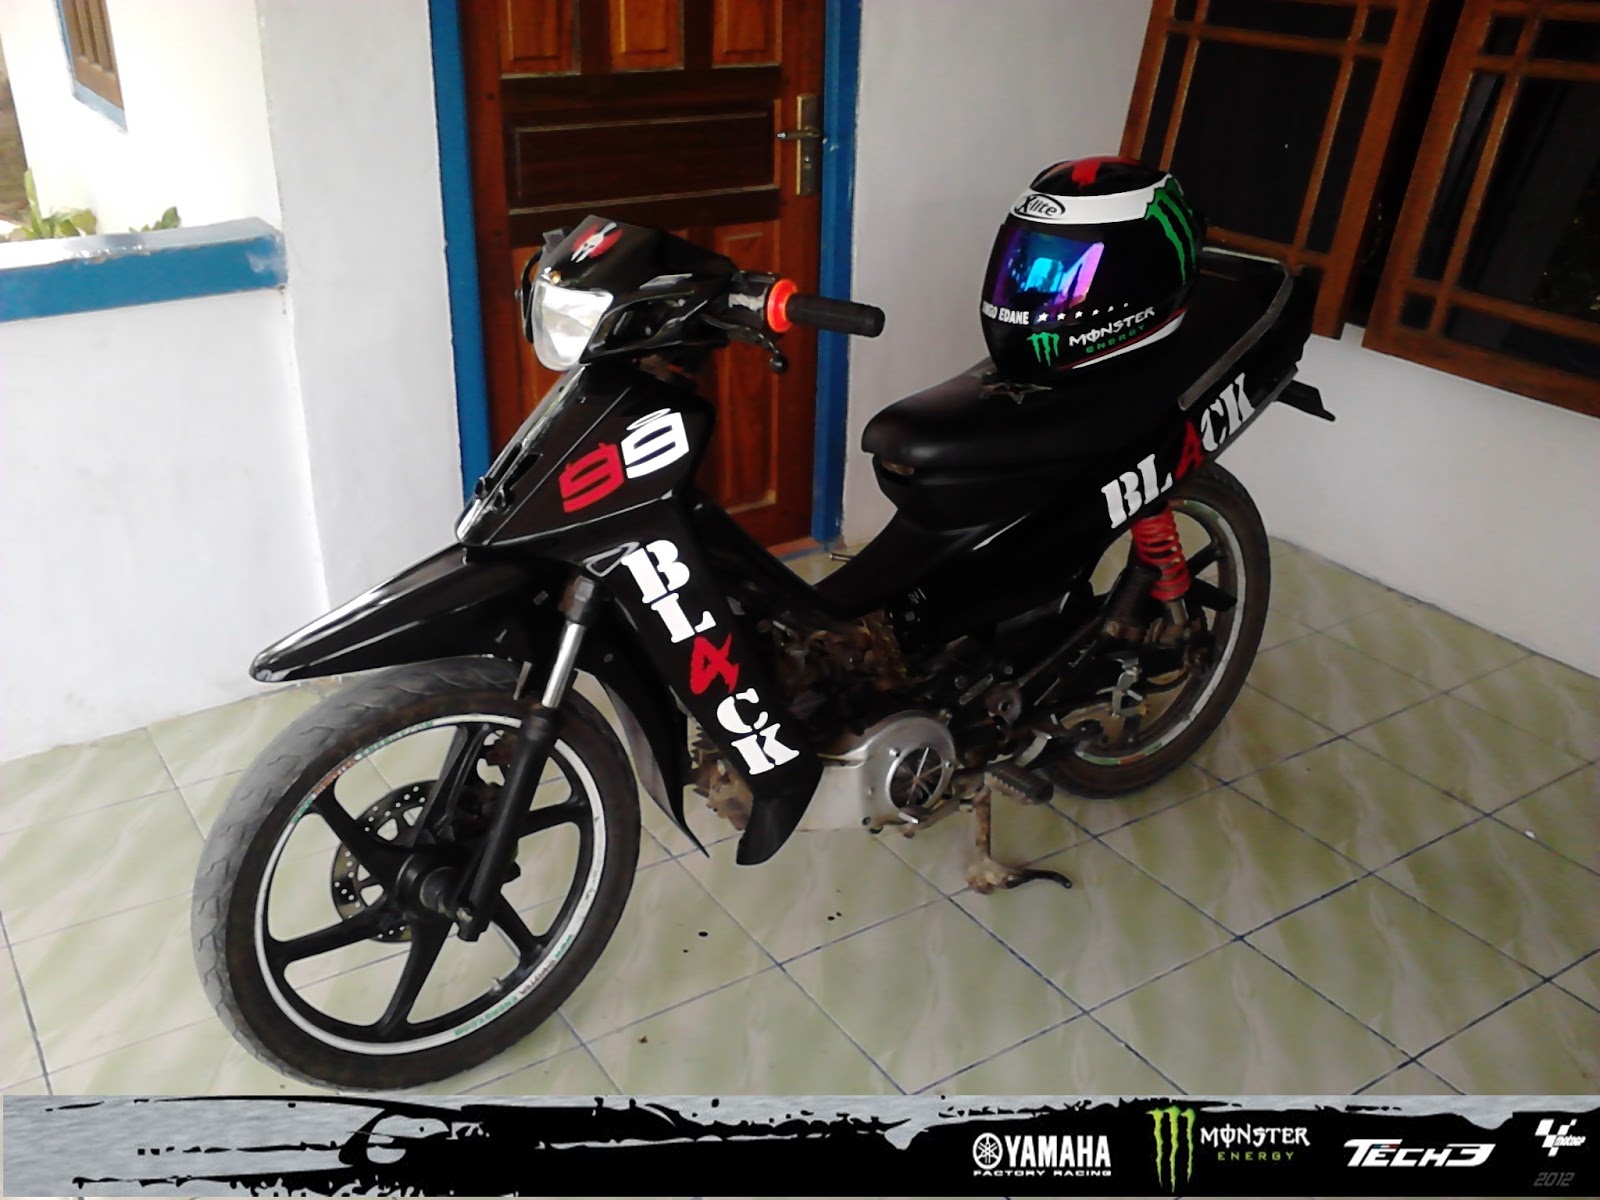 86 Modifikasi Motor Yamaha Fiz R Terlengkap Kinyis Motor